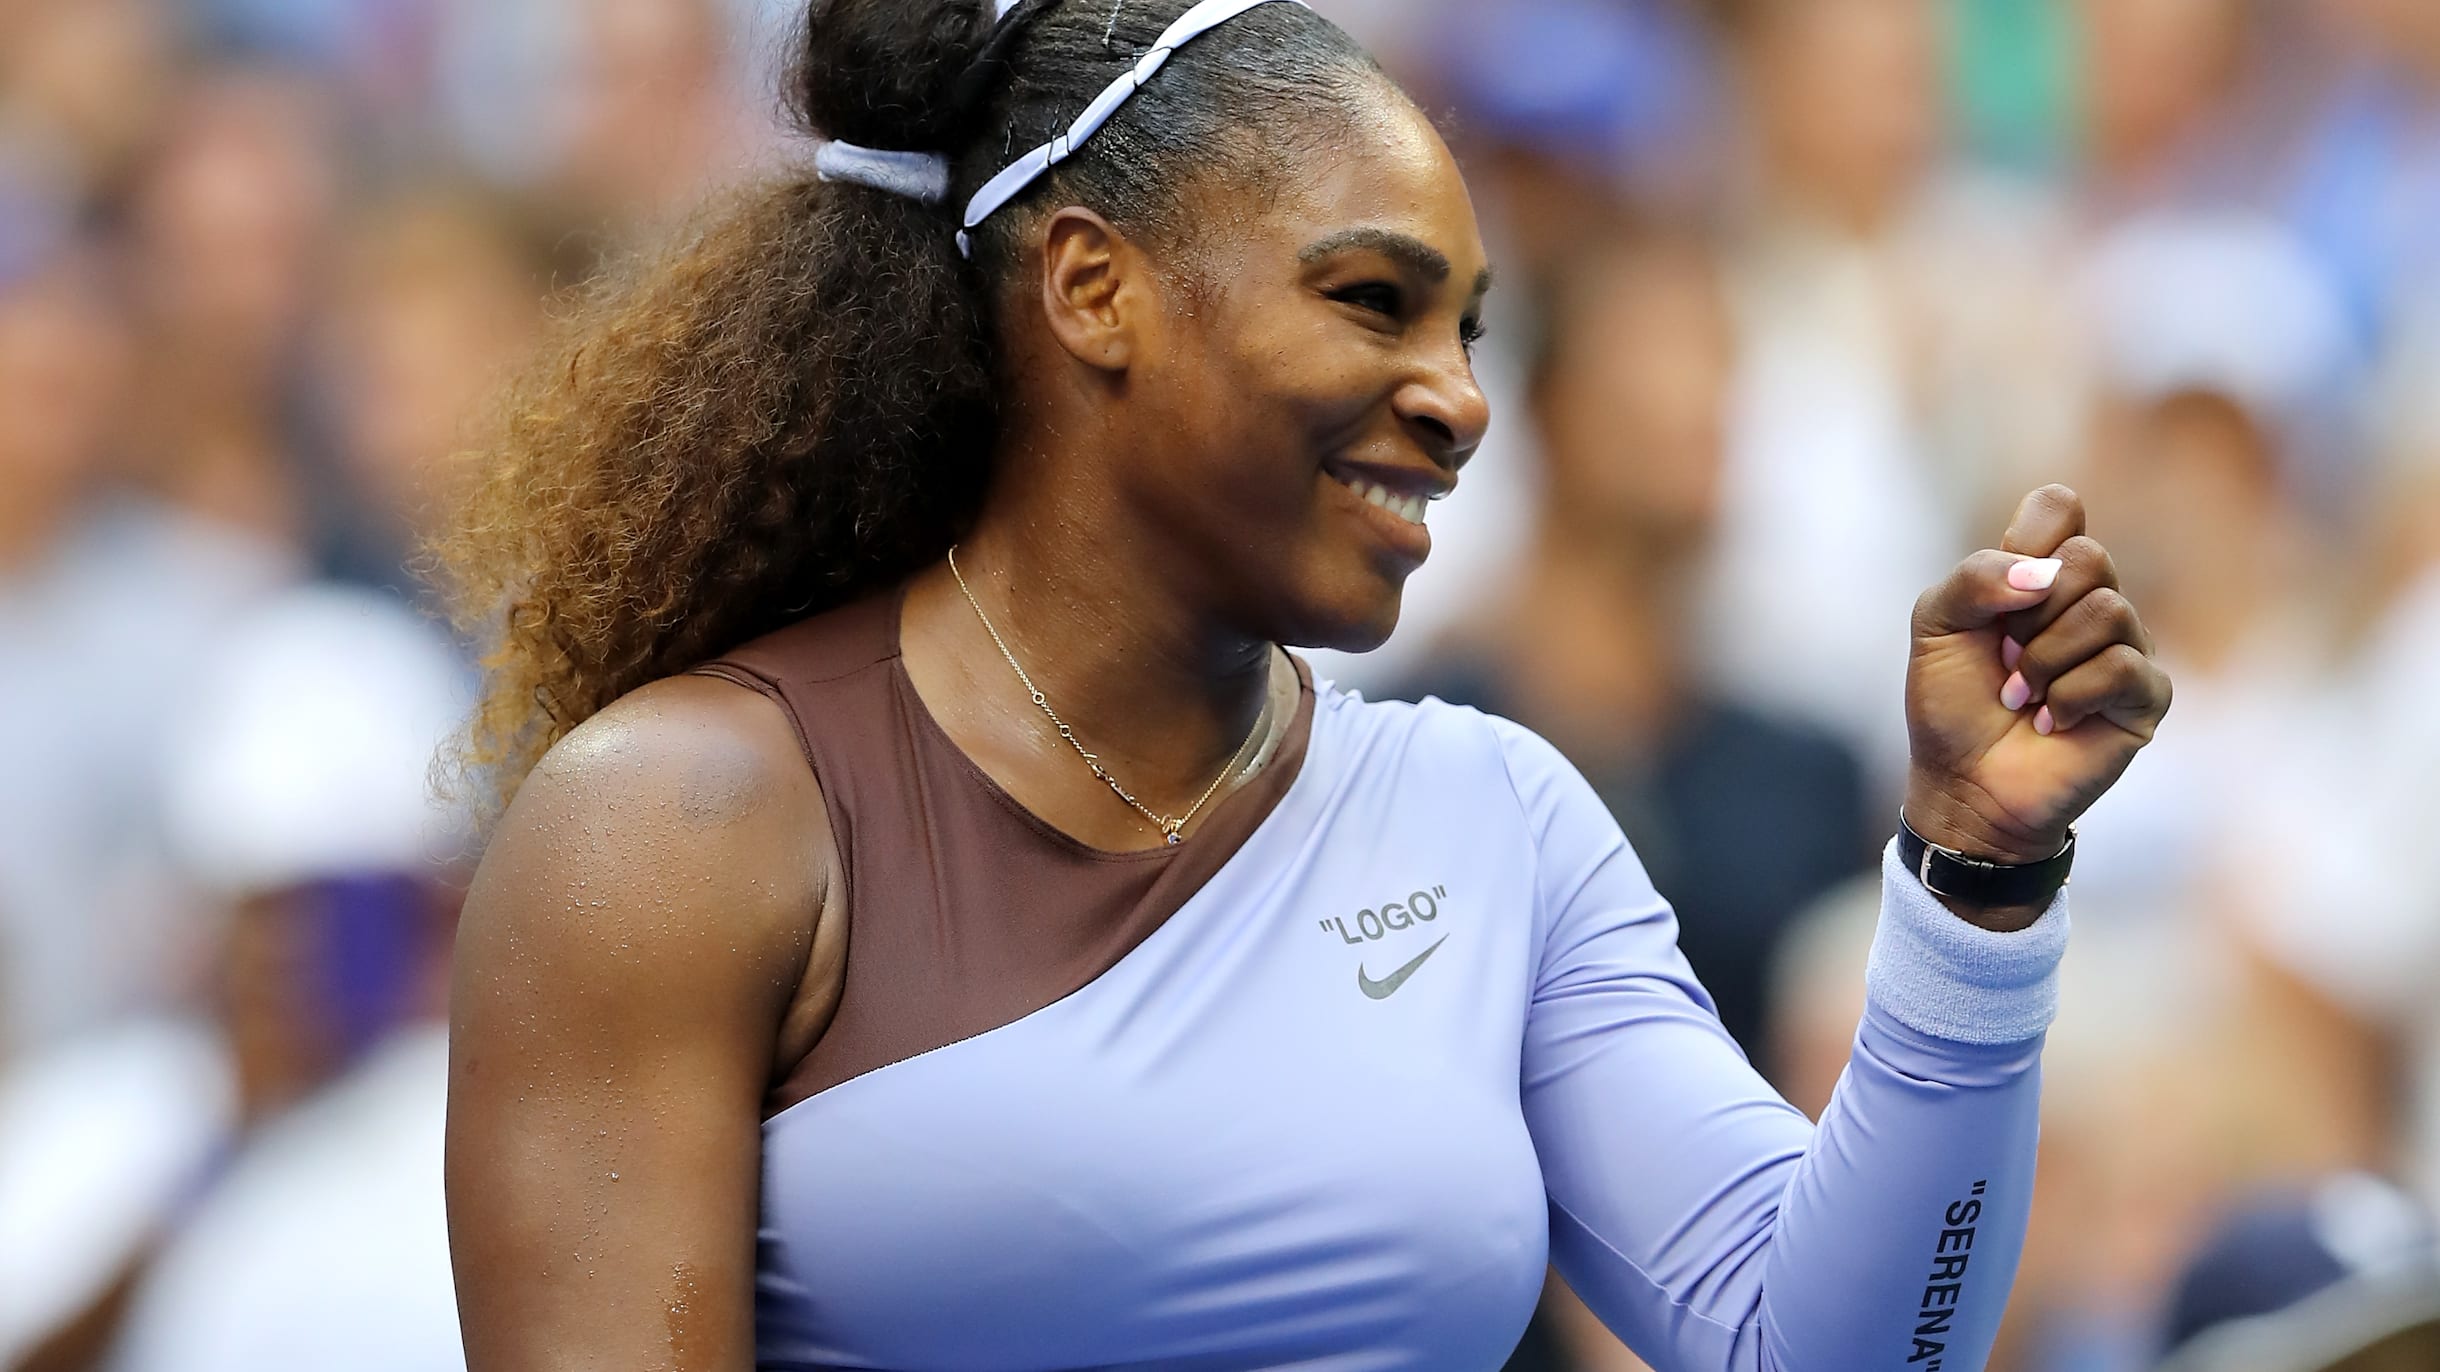 Serena Williams Tennis star returns to action in Lexington